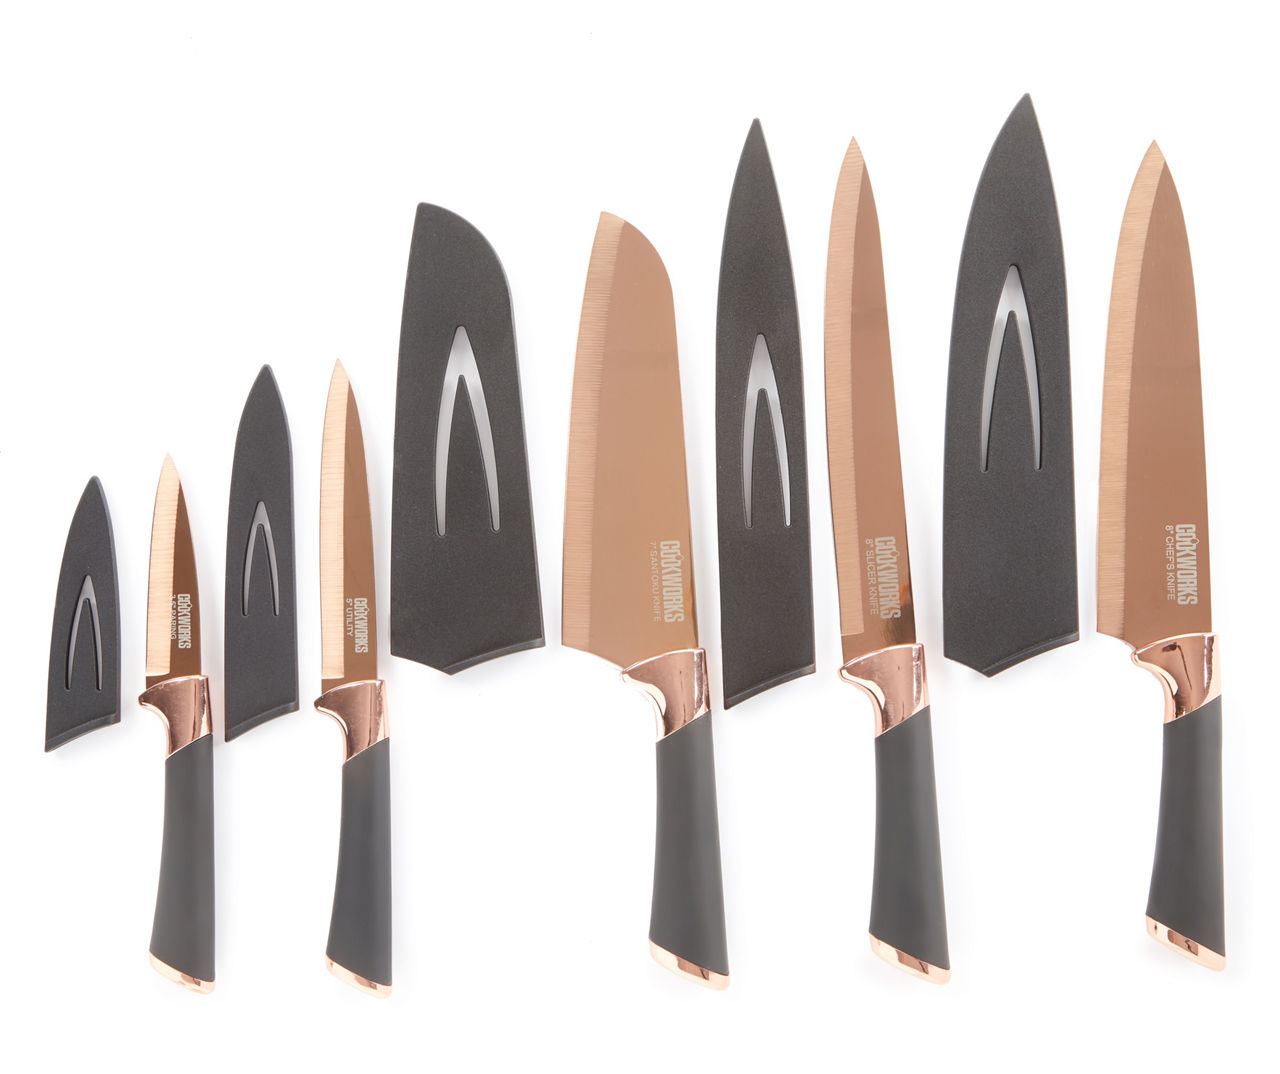 at Home 10-Piece Black Handle Knife & Sheath Set